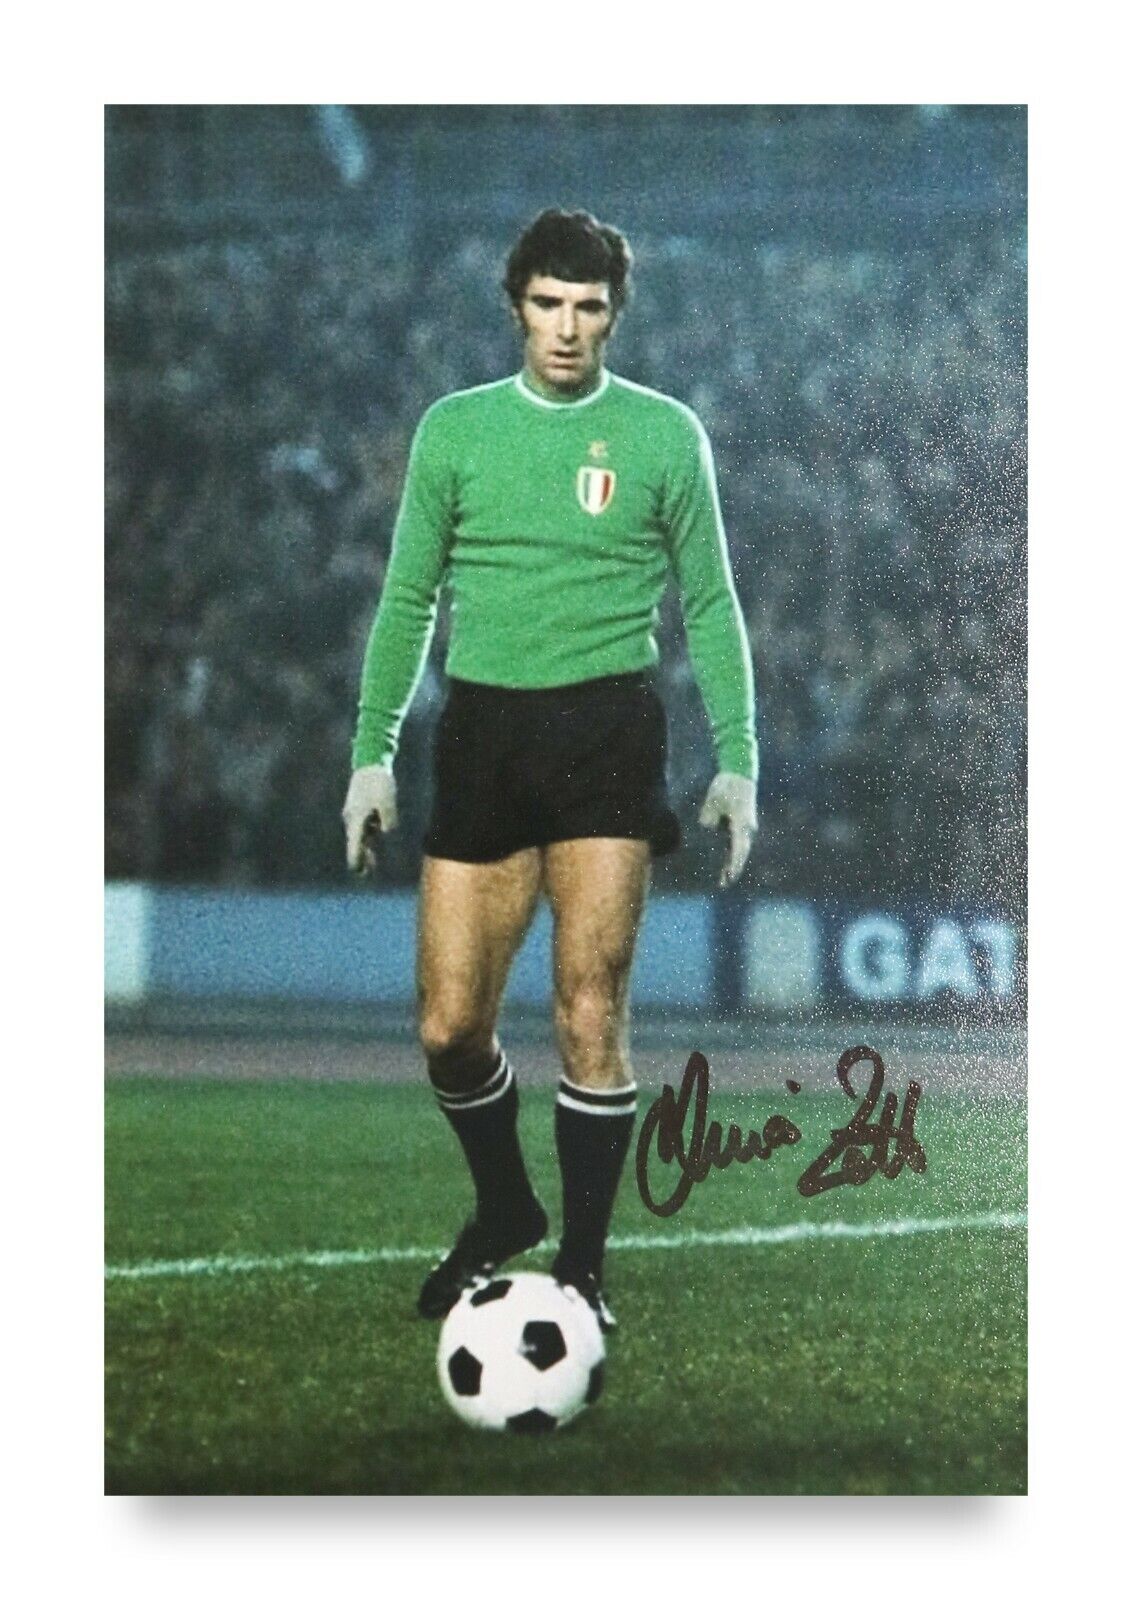 Dino Zoff Signed 6x4 Photo Poster painting Italy Goalkeeper Juventus Autograph Memorabilia + COA